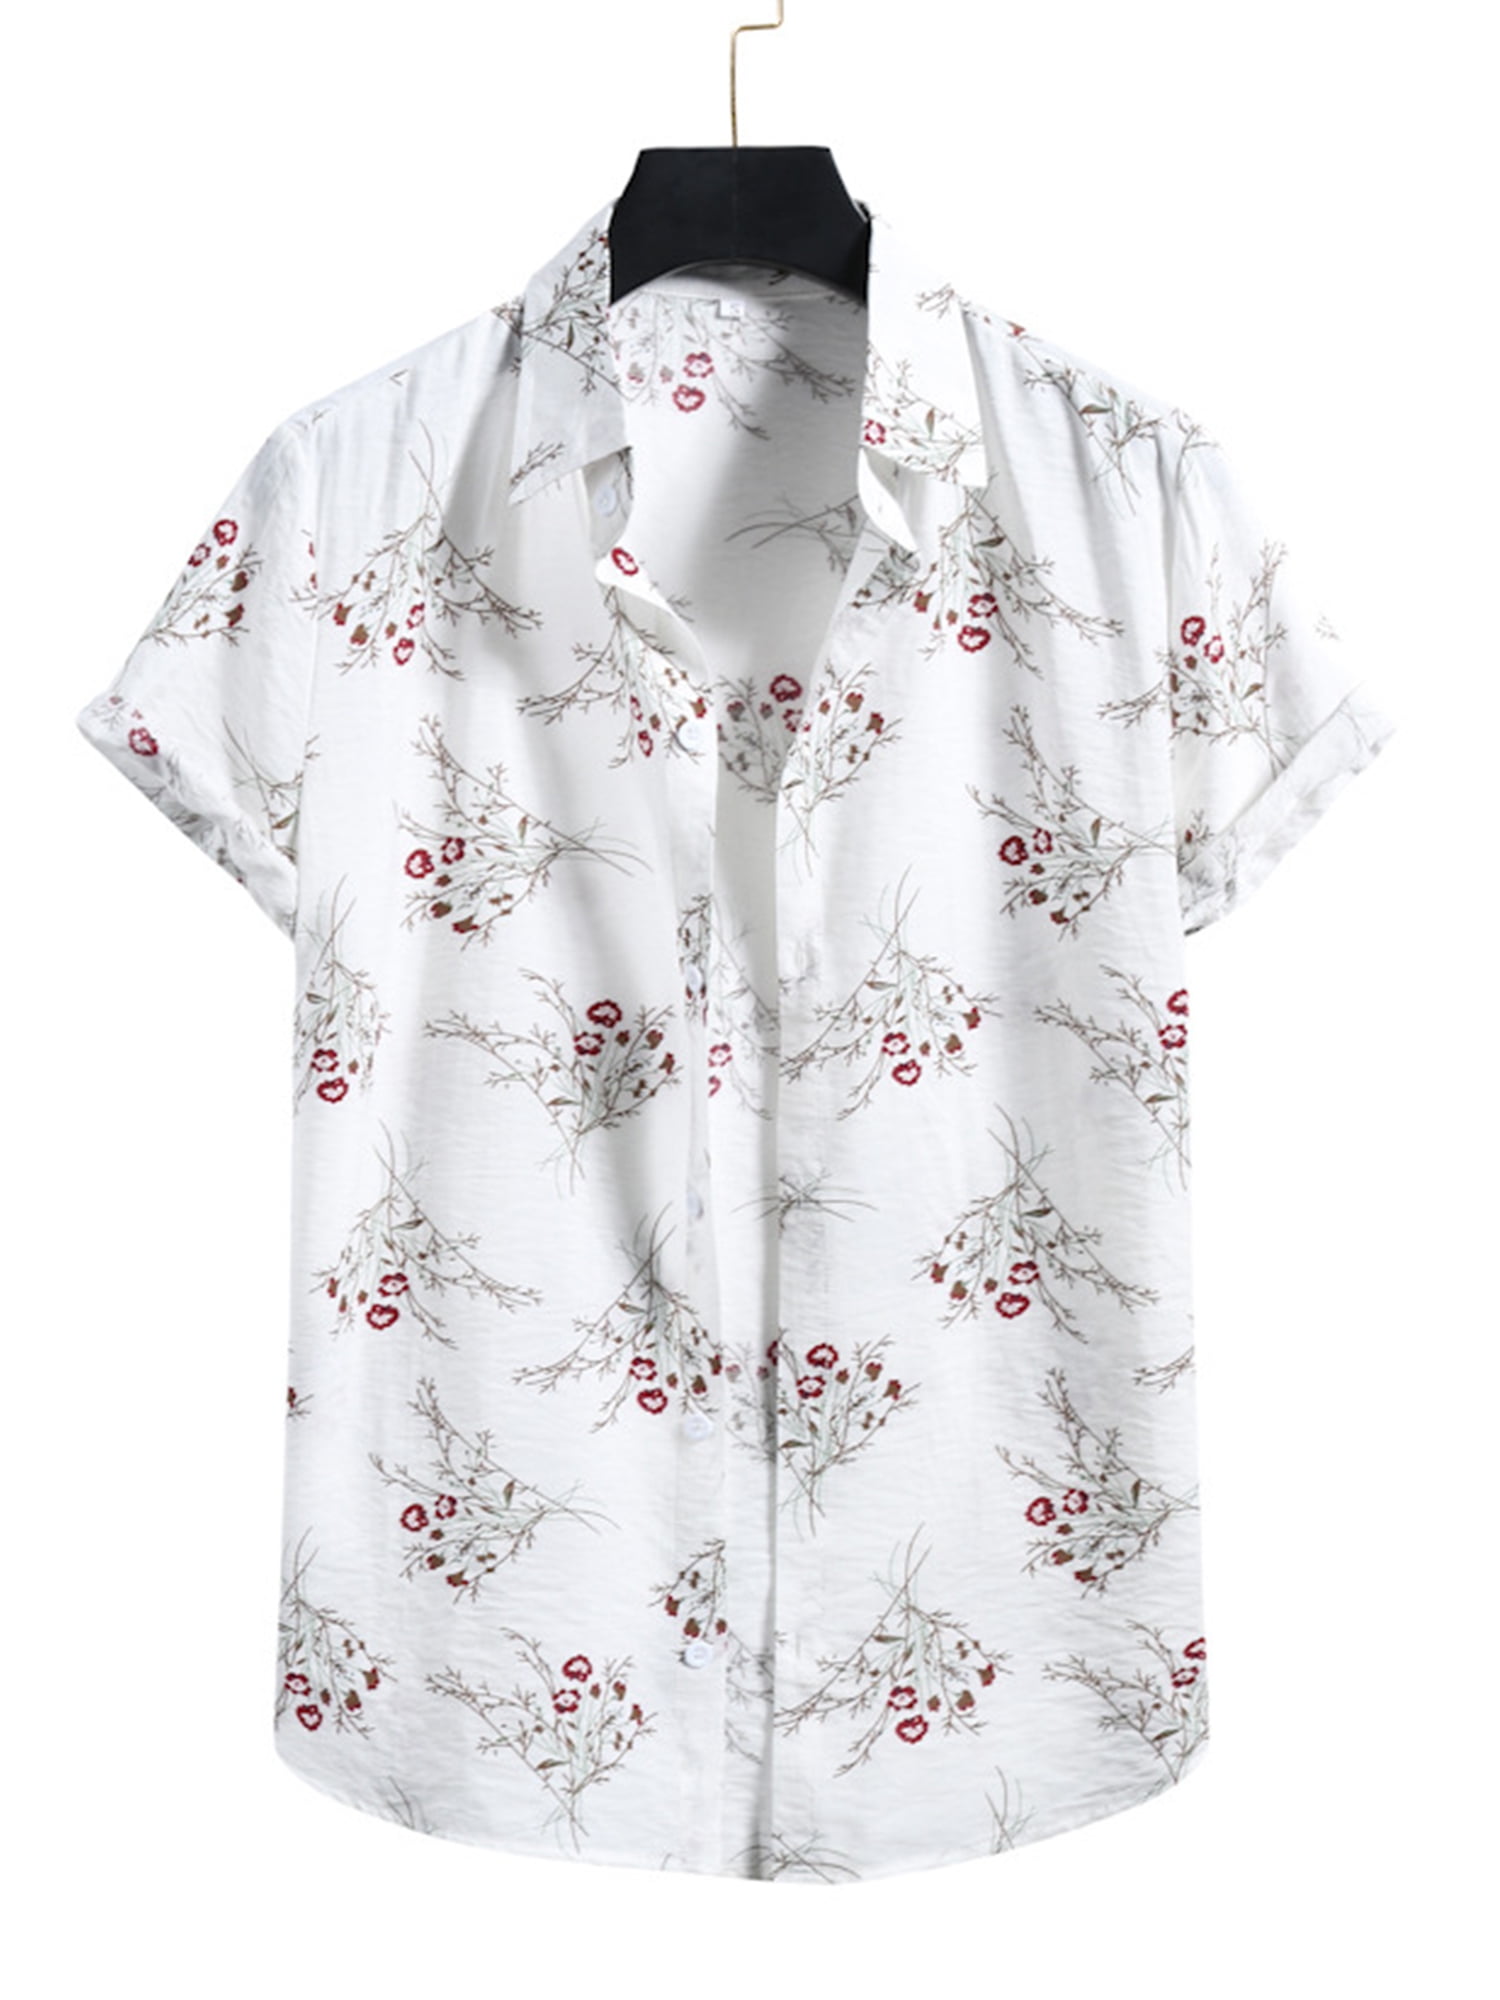 EELa Mens Short Sleeve Printed Floral Flower Casual Button Down Shirt Summer Hawaiian M